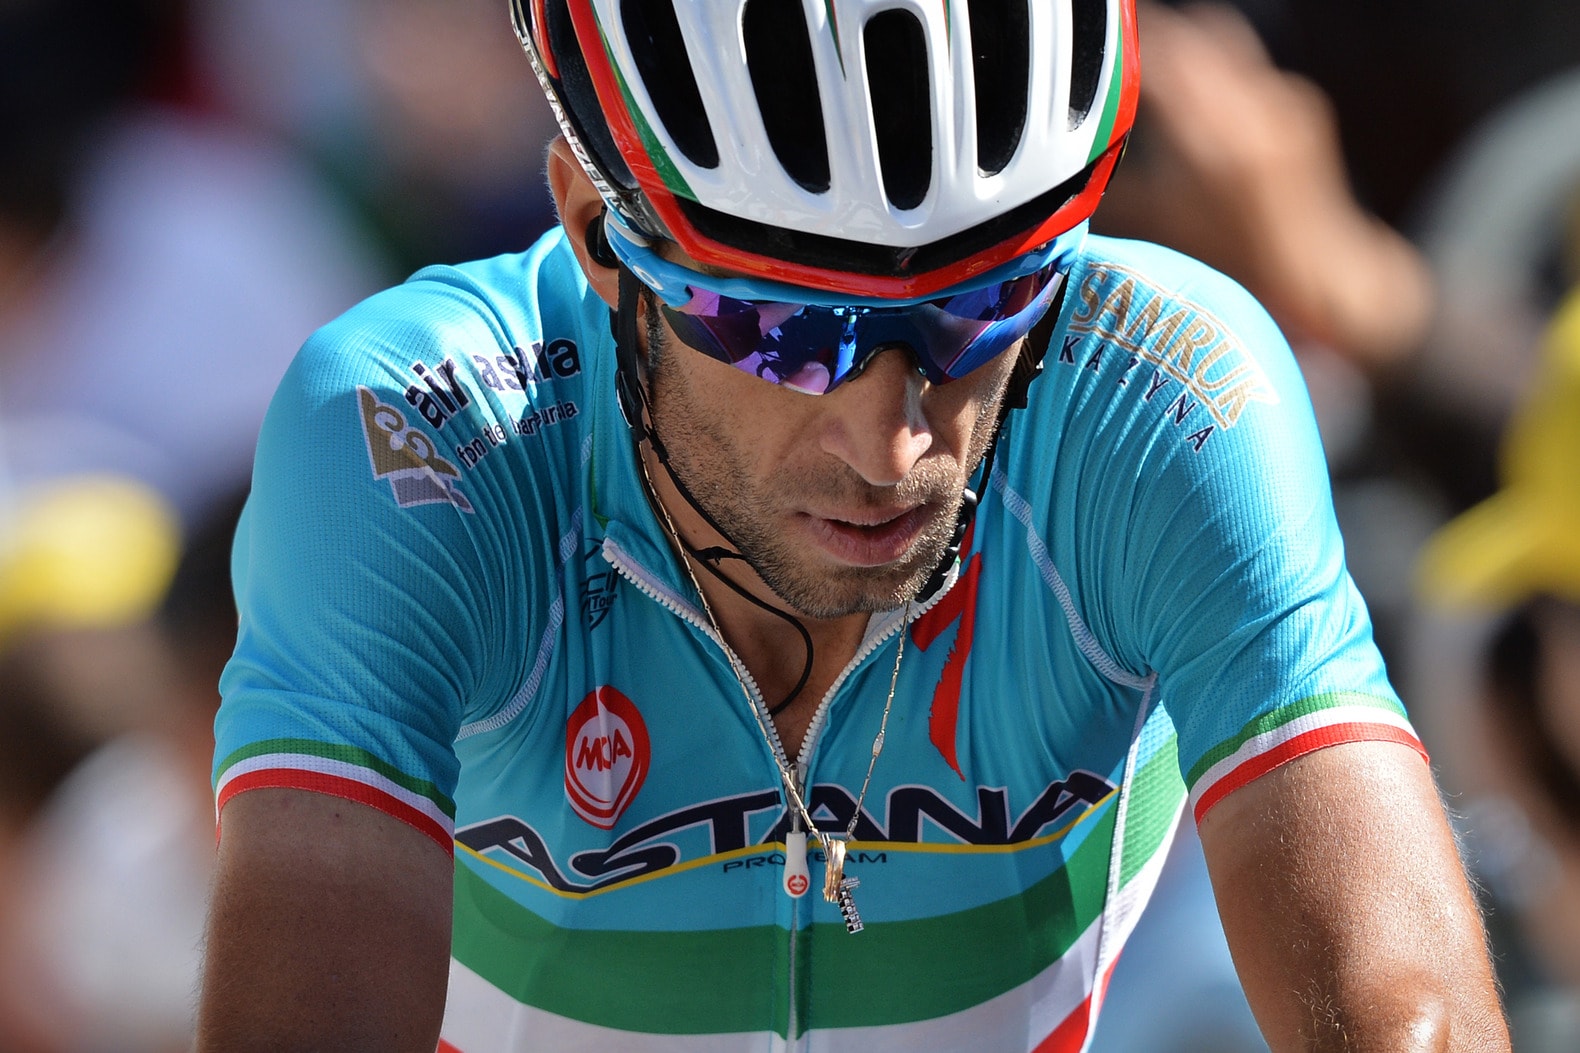 Italiaan Nibali start toch in Vuelta